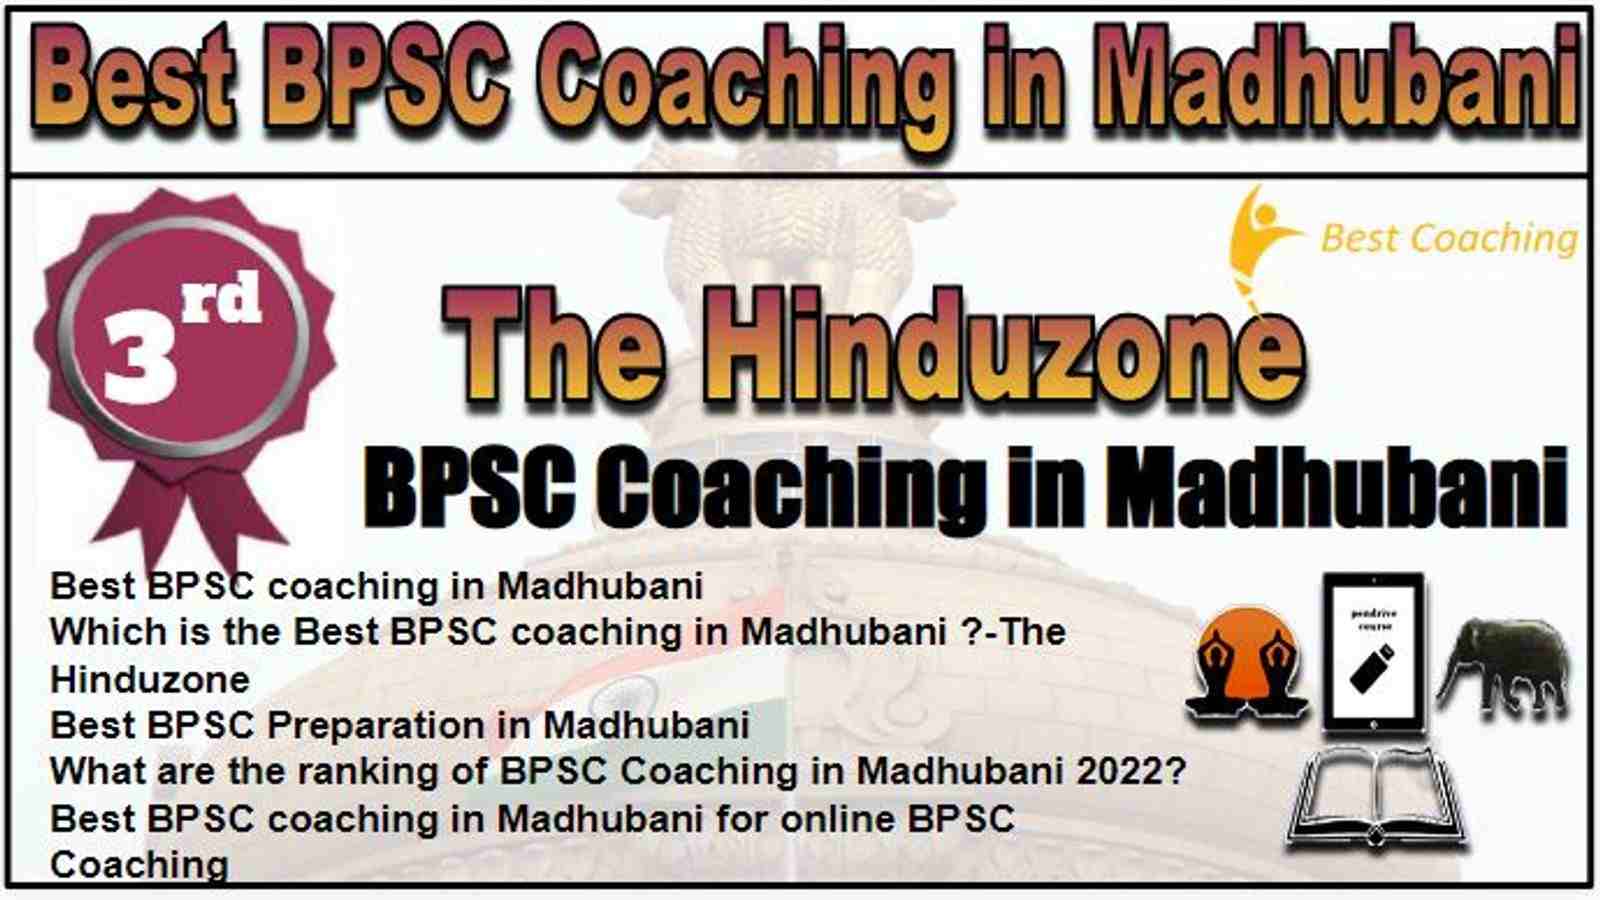 Rank 3 Best BPSC Coaching in Madhubani